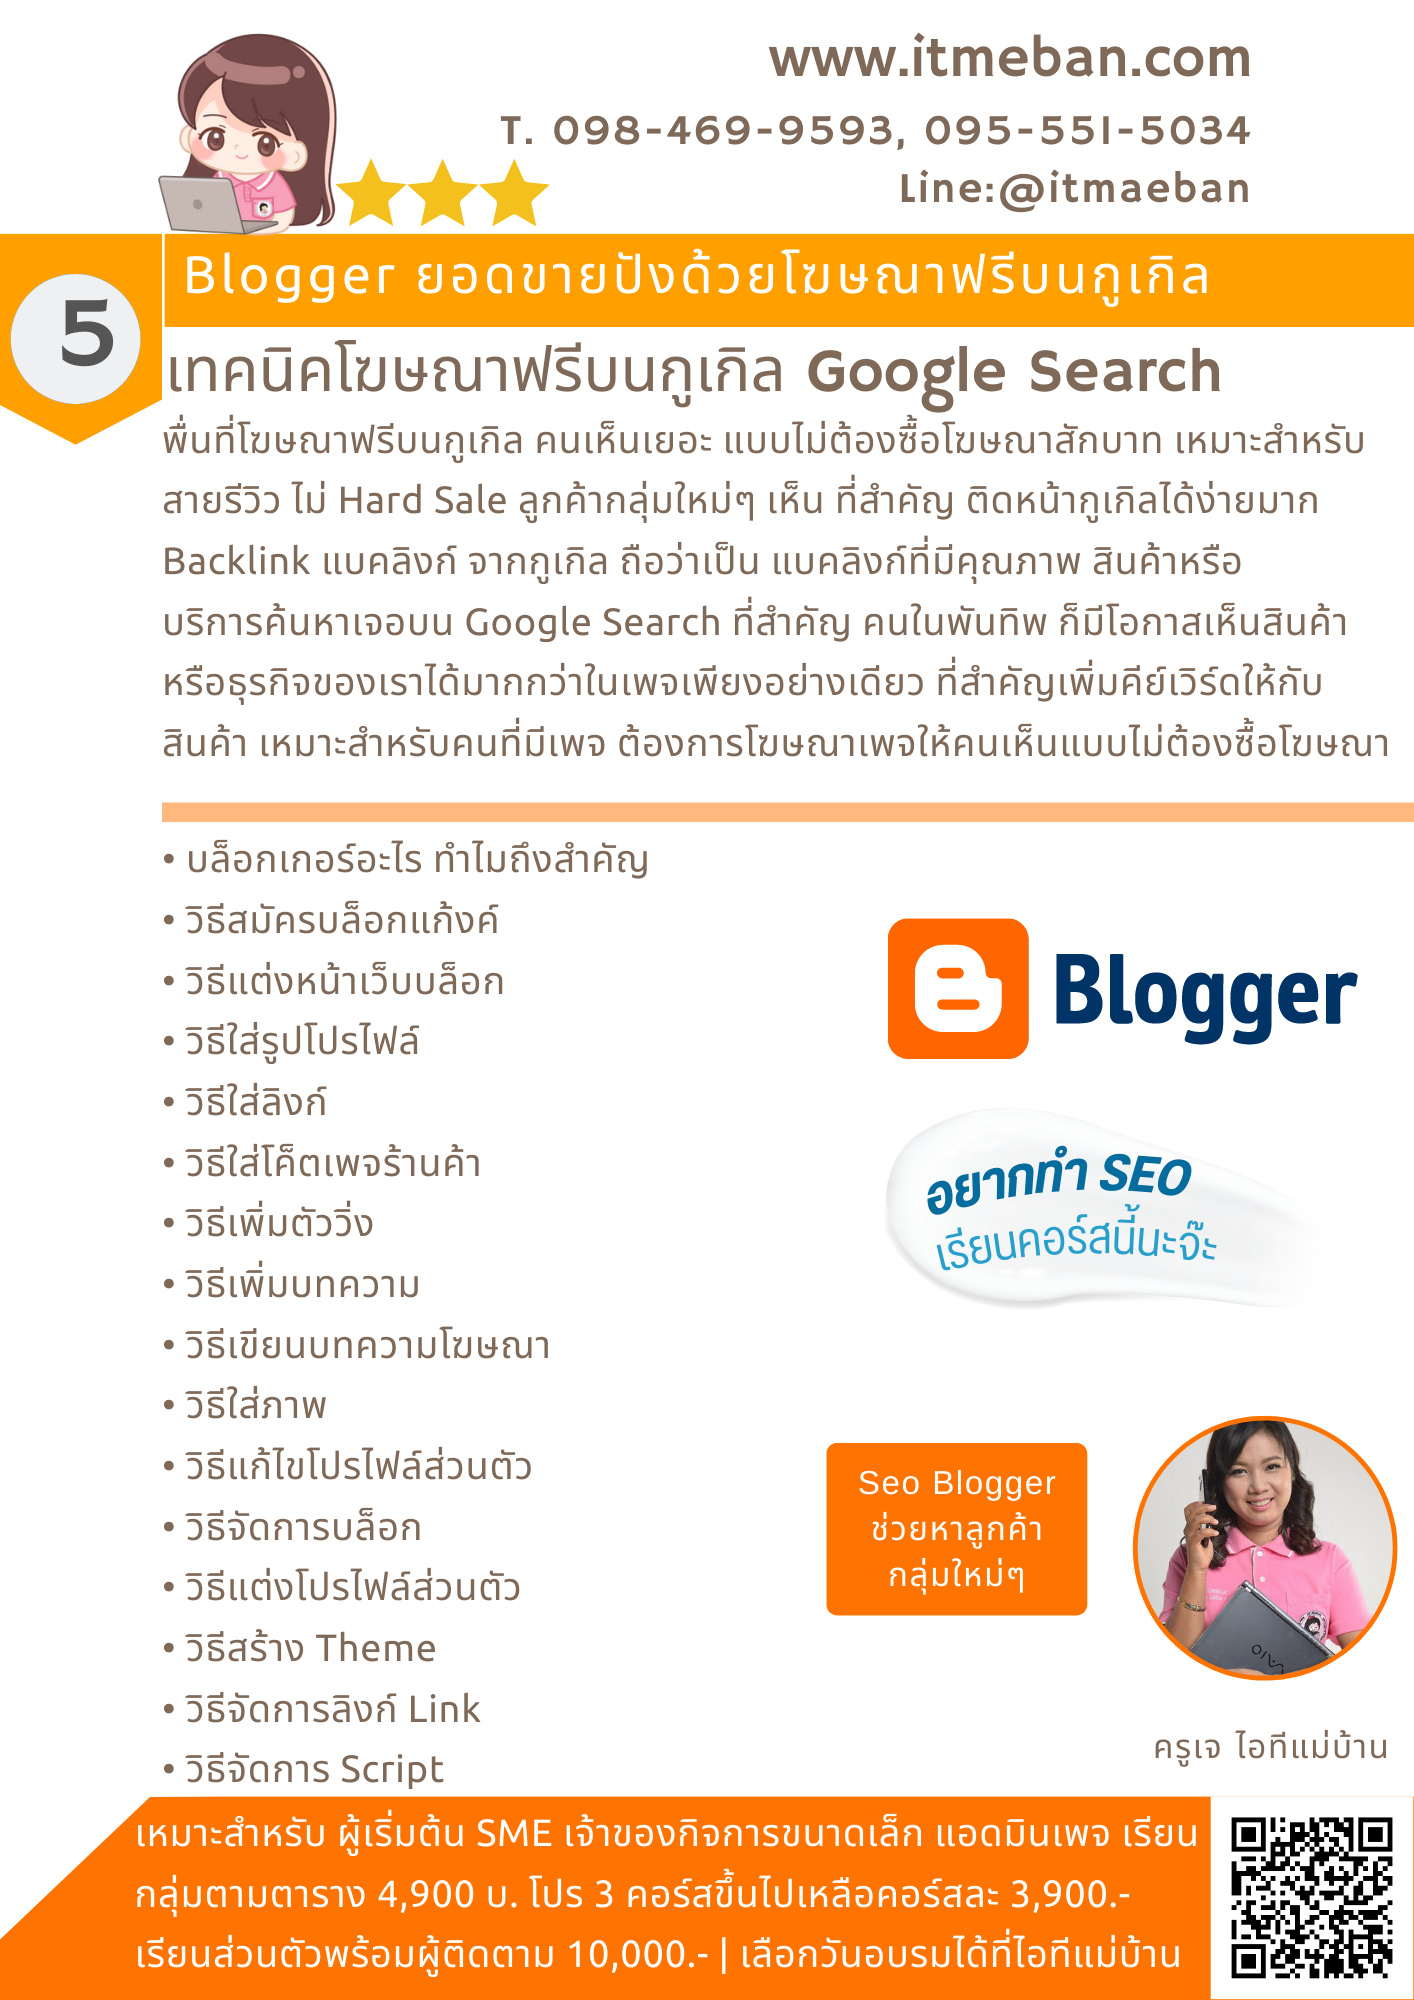 Seo Blogger